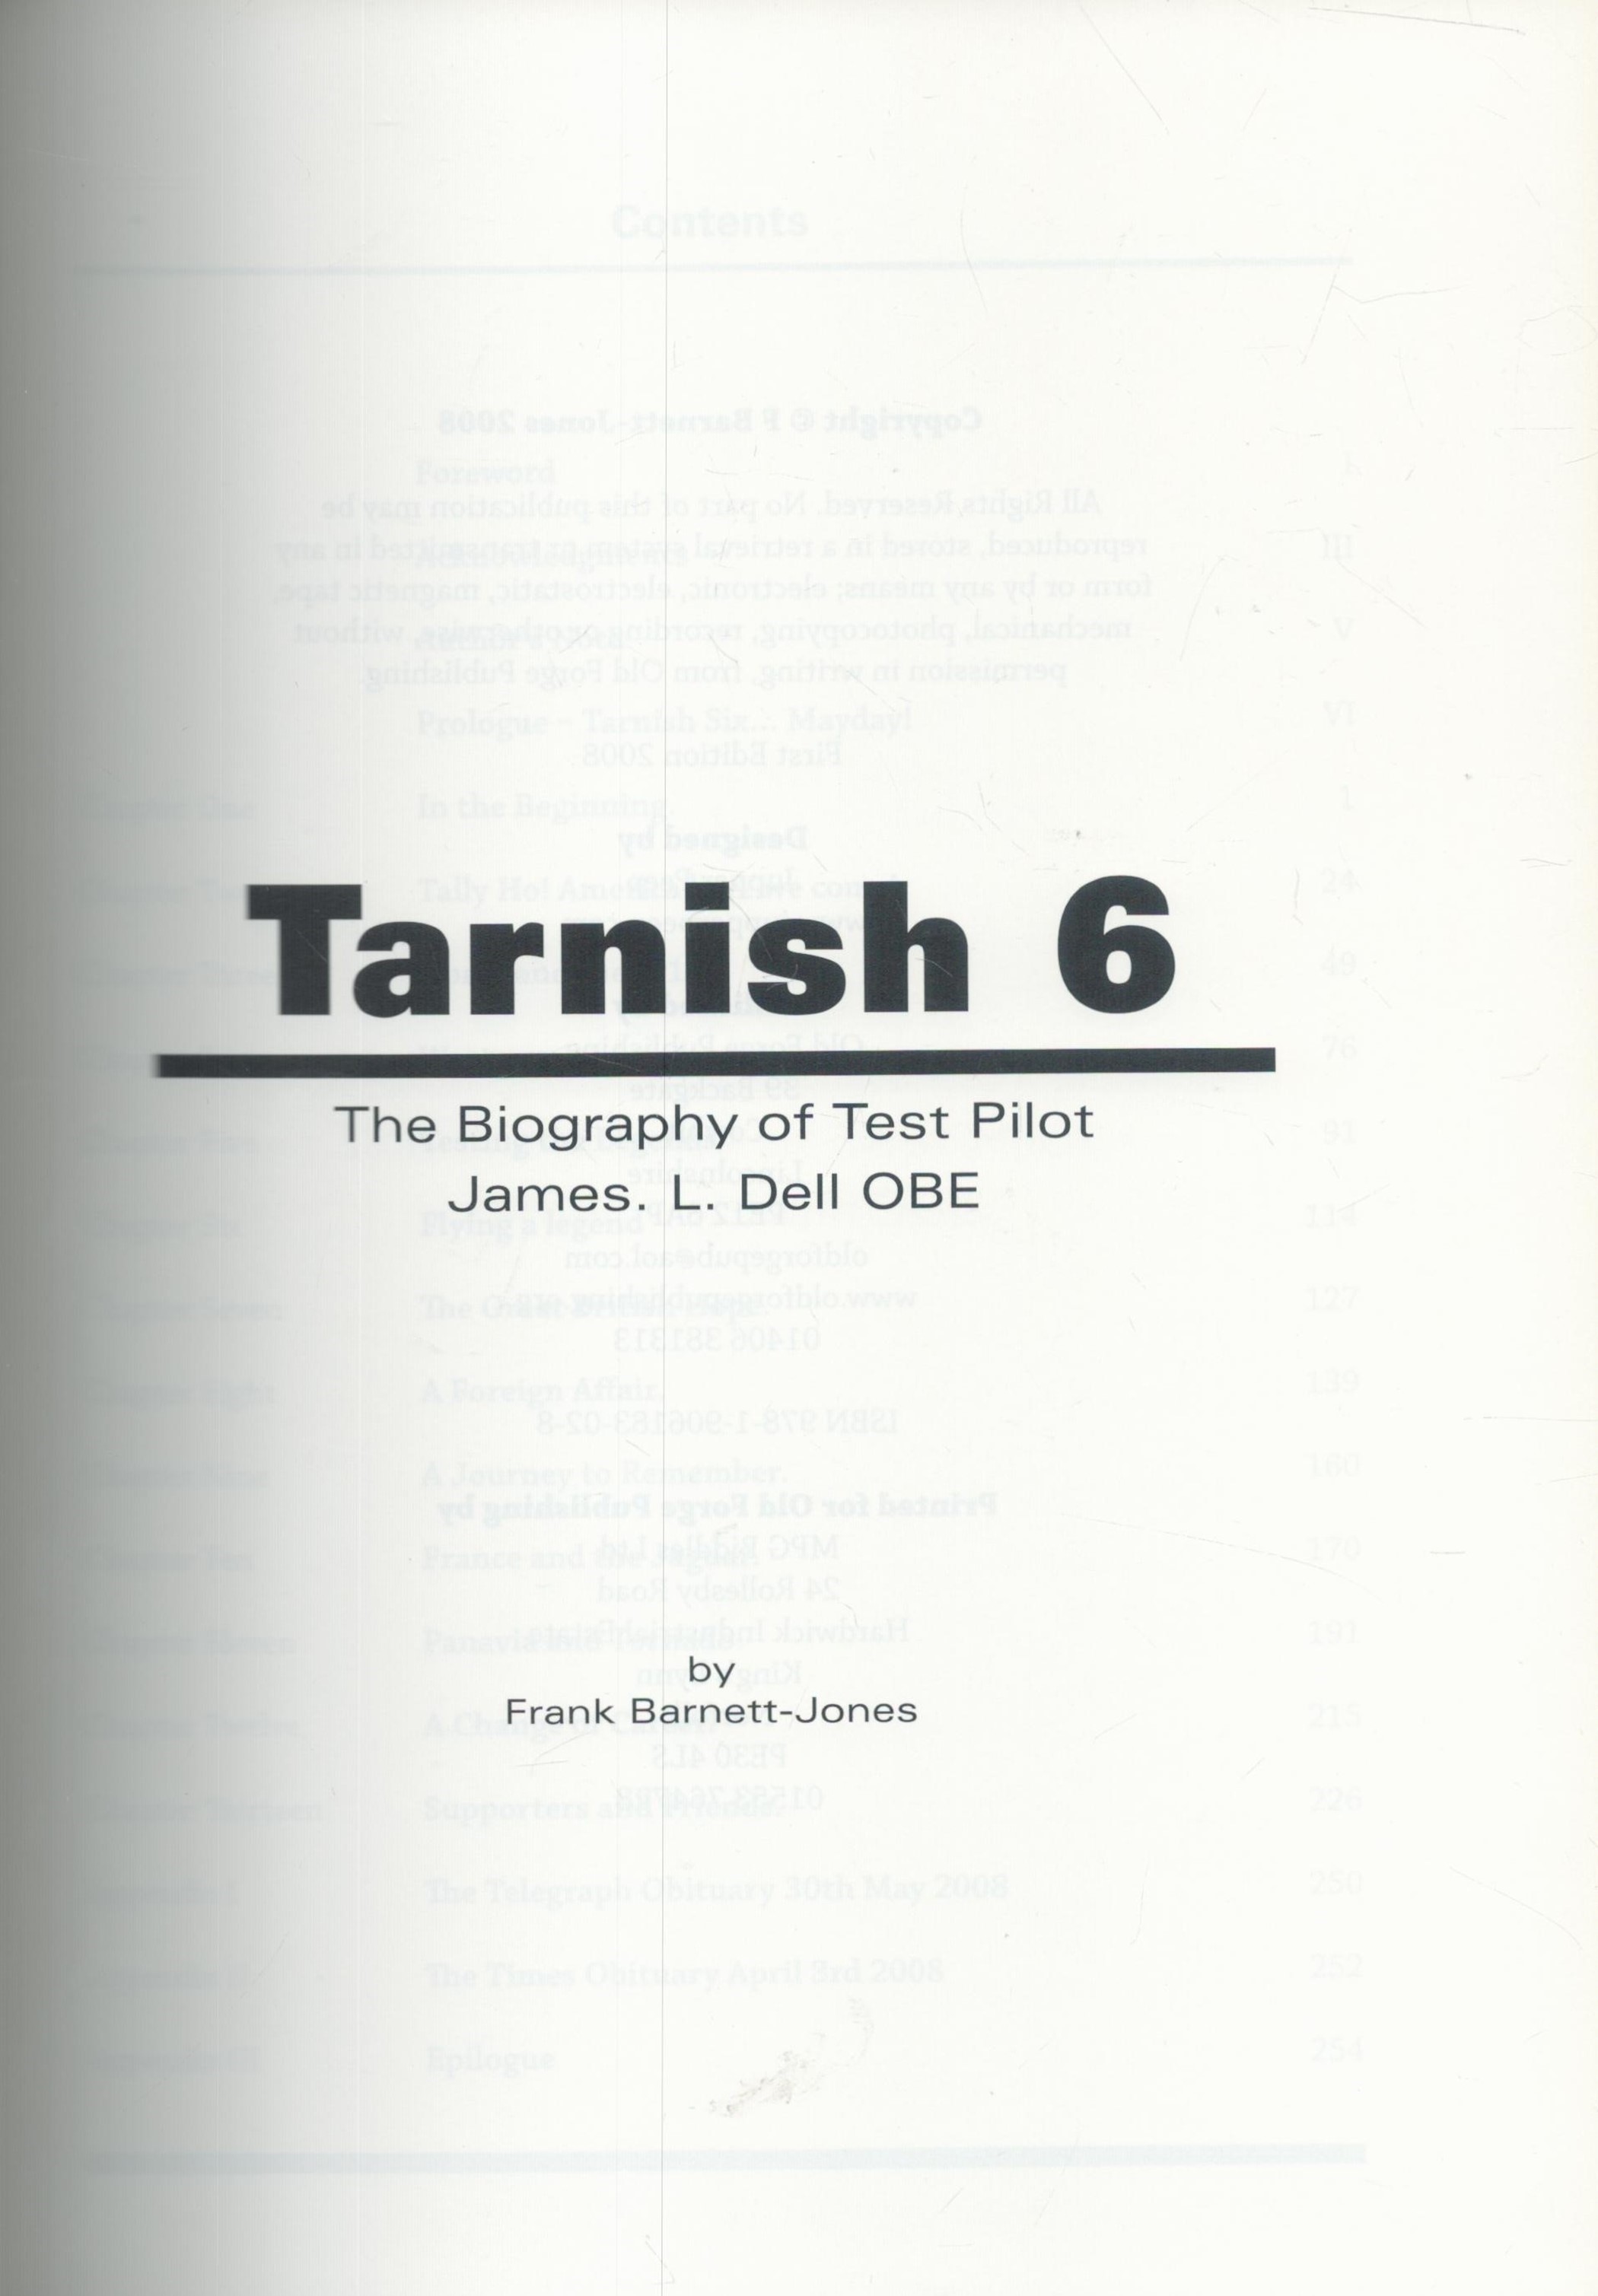 Tarnish 6 - The Biography of Test Pilot Jimmy Dell by Frank Barnett-Jones 2008 Hardback Book First - Image 6 of 9